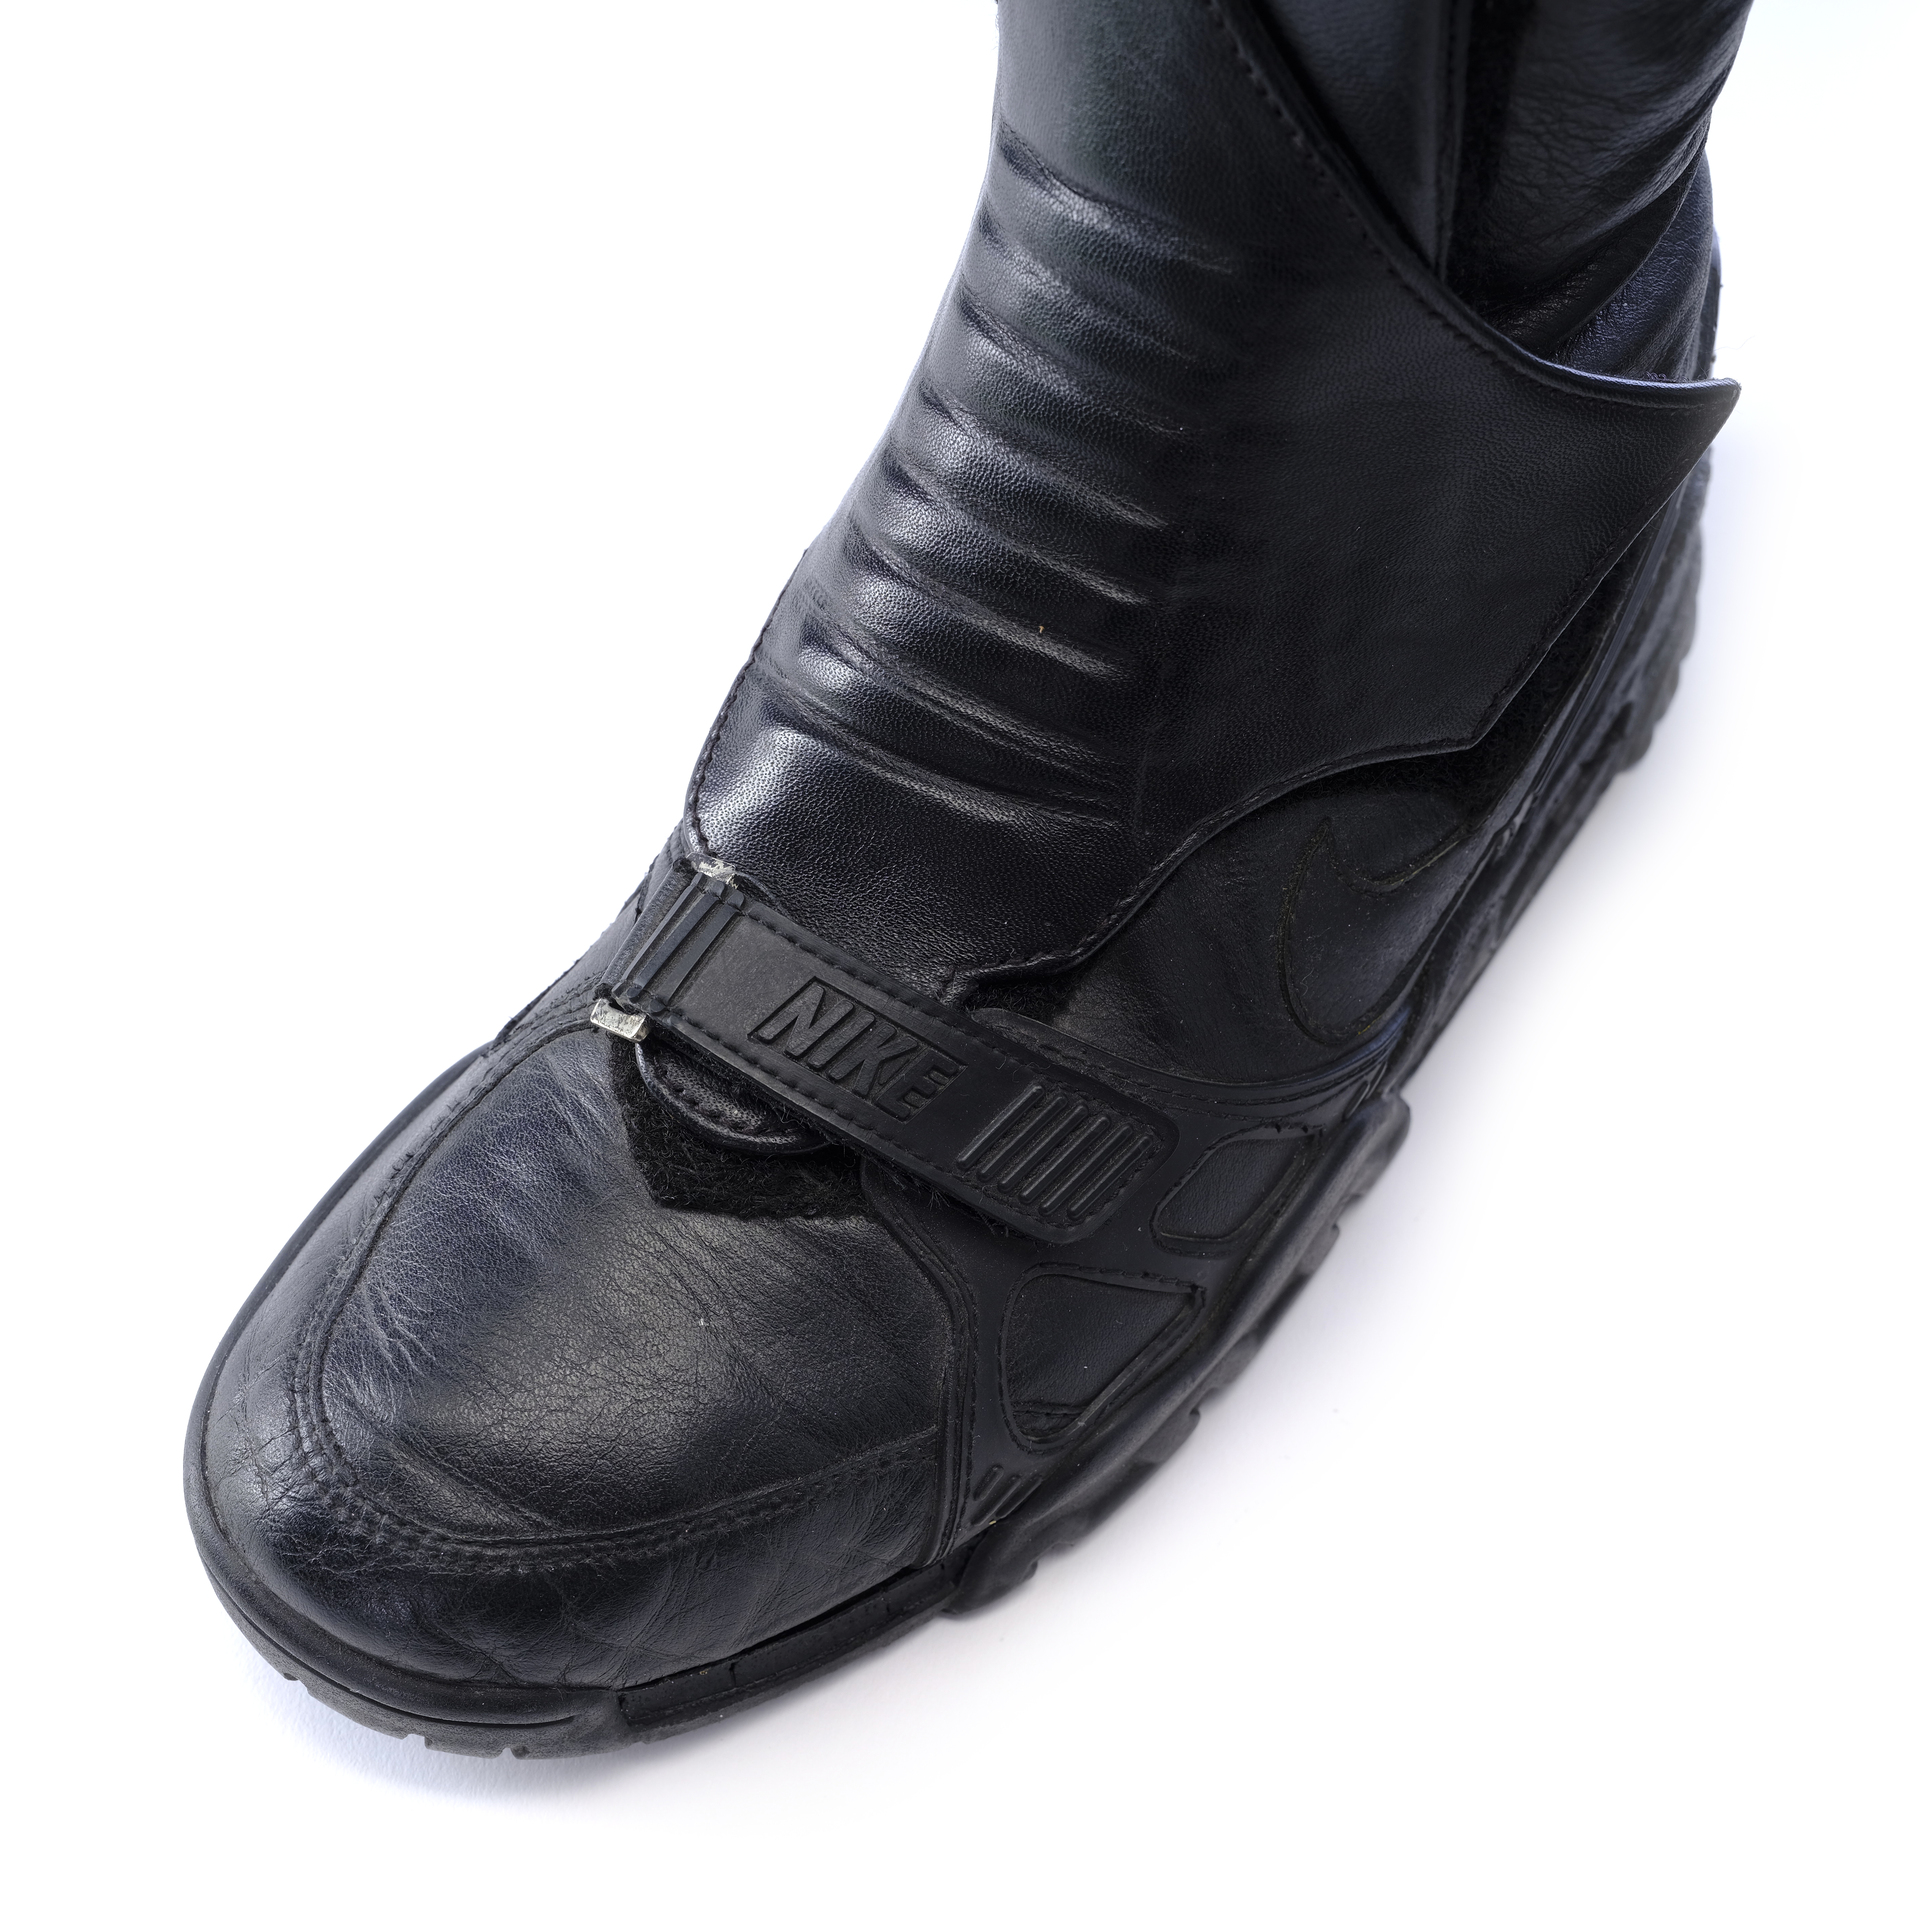 BATMAN - Batman's (Michael Keaton) Nike-Made Bat Boots - Image 6 of 8